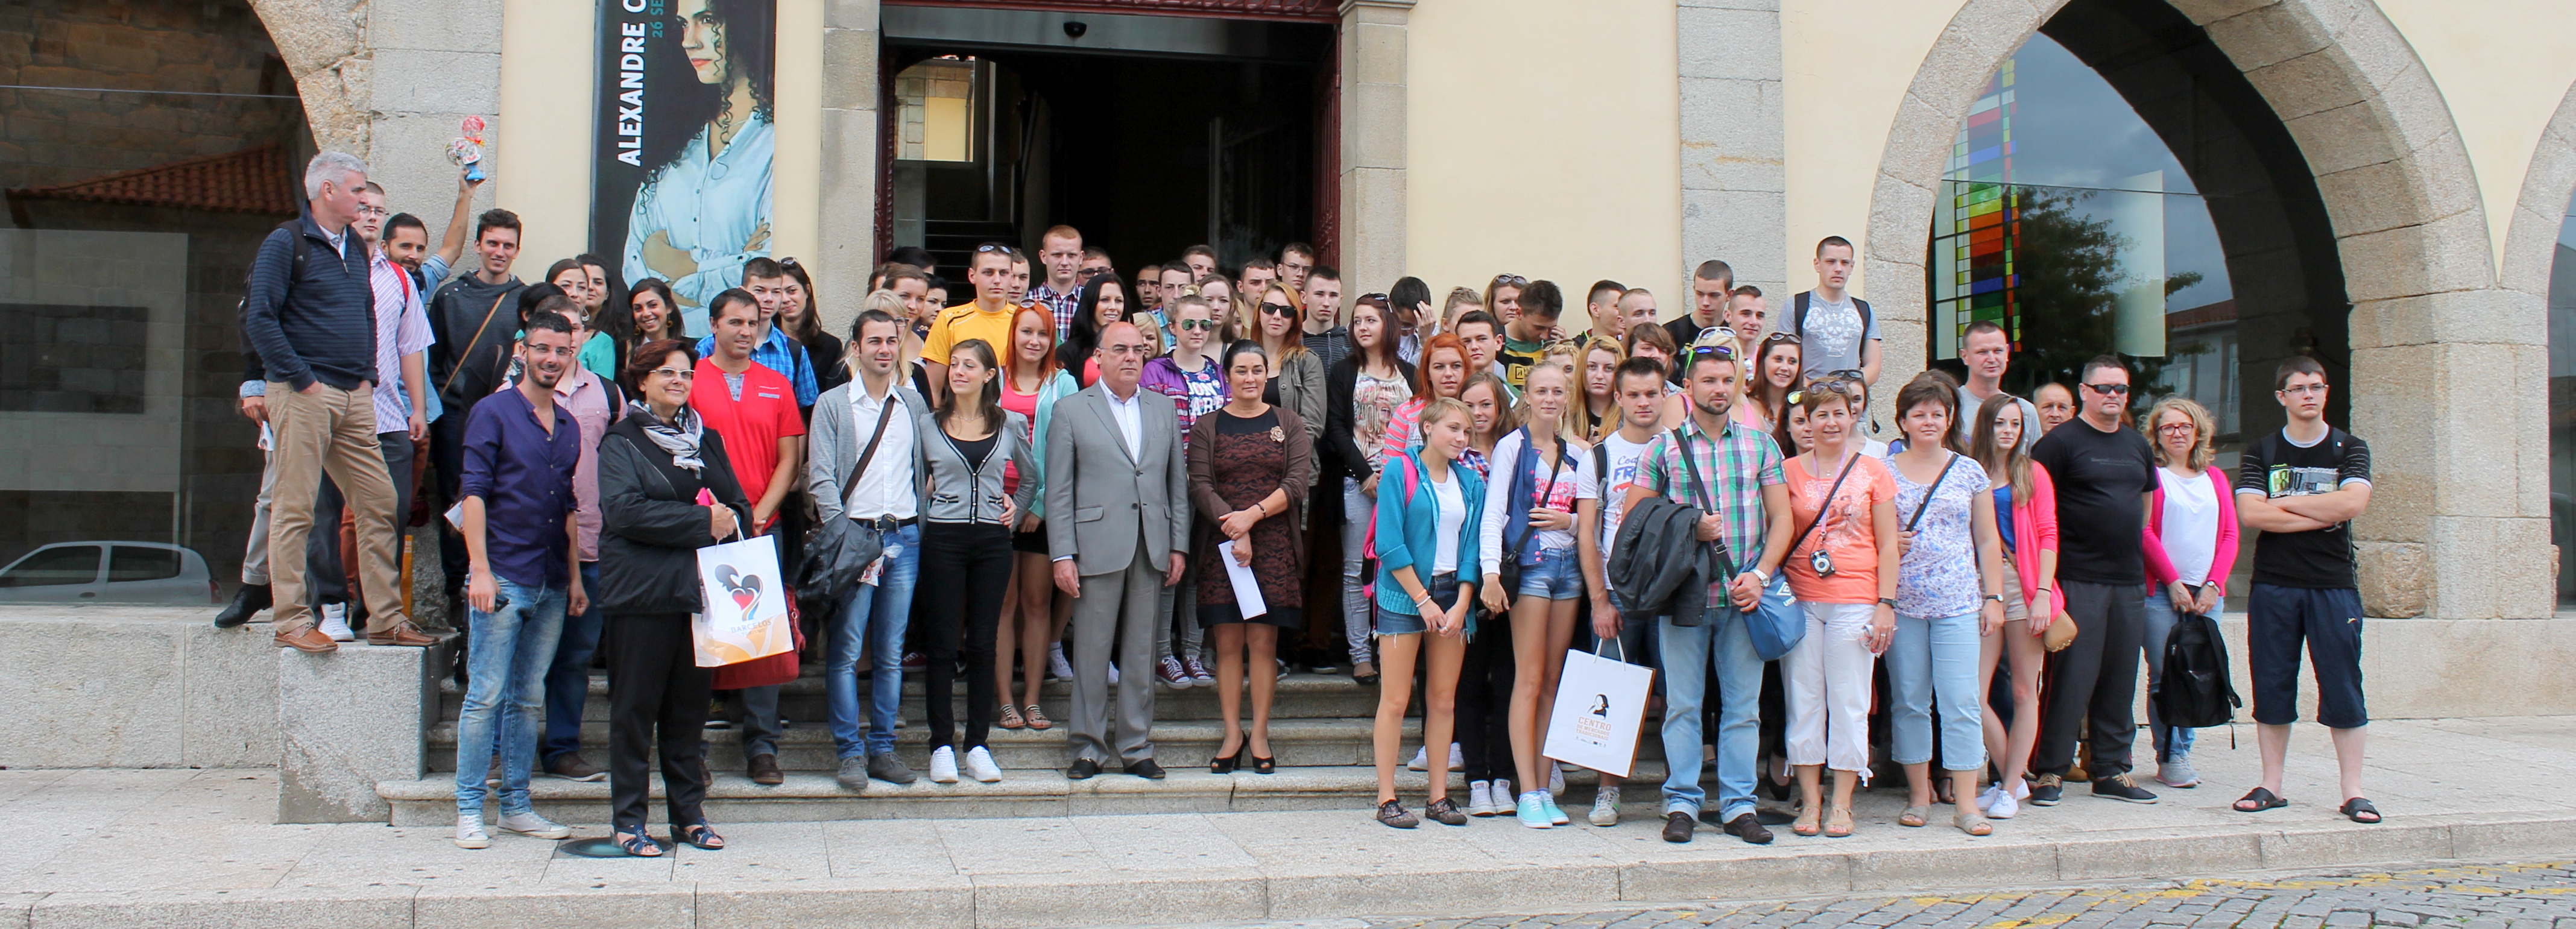 Intercâmbio já trouxe a Barcelos 1500 alunos e professores de vários países europeus